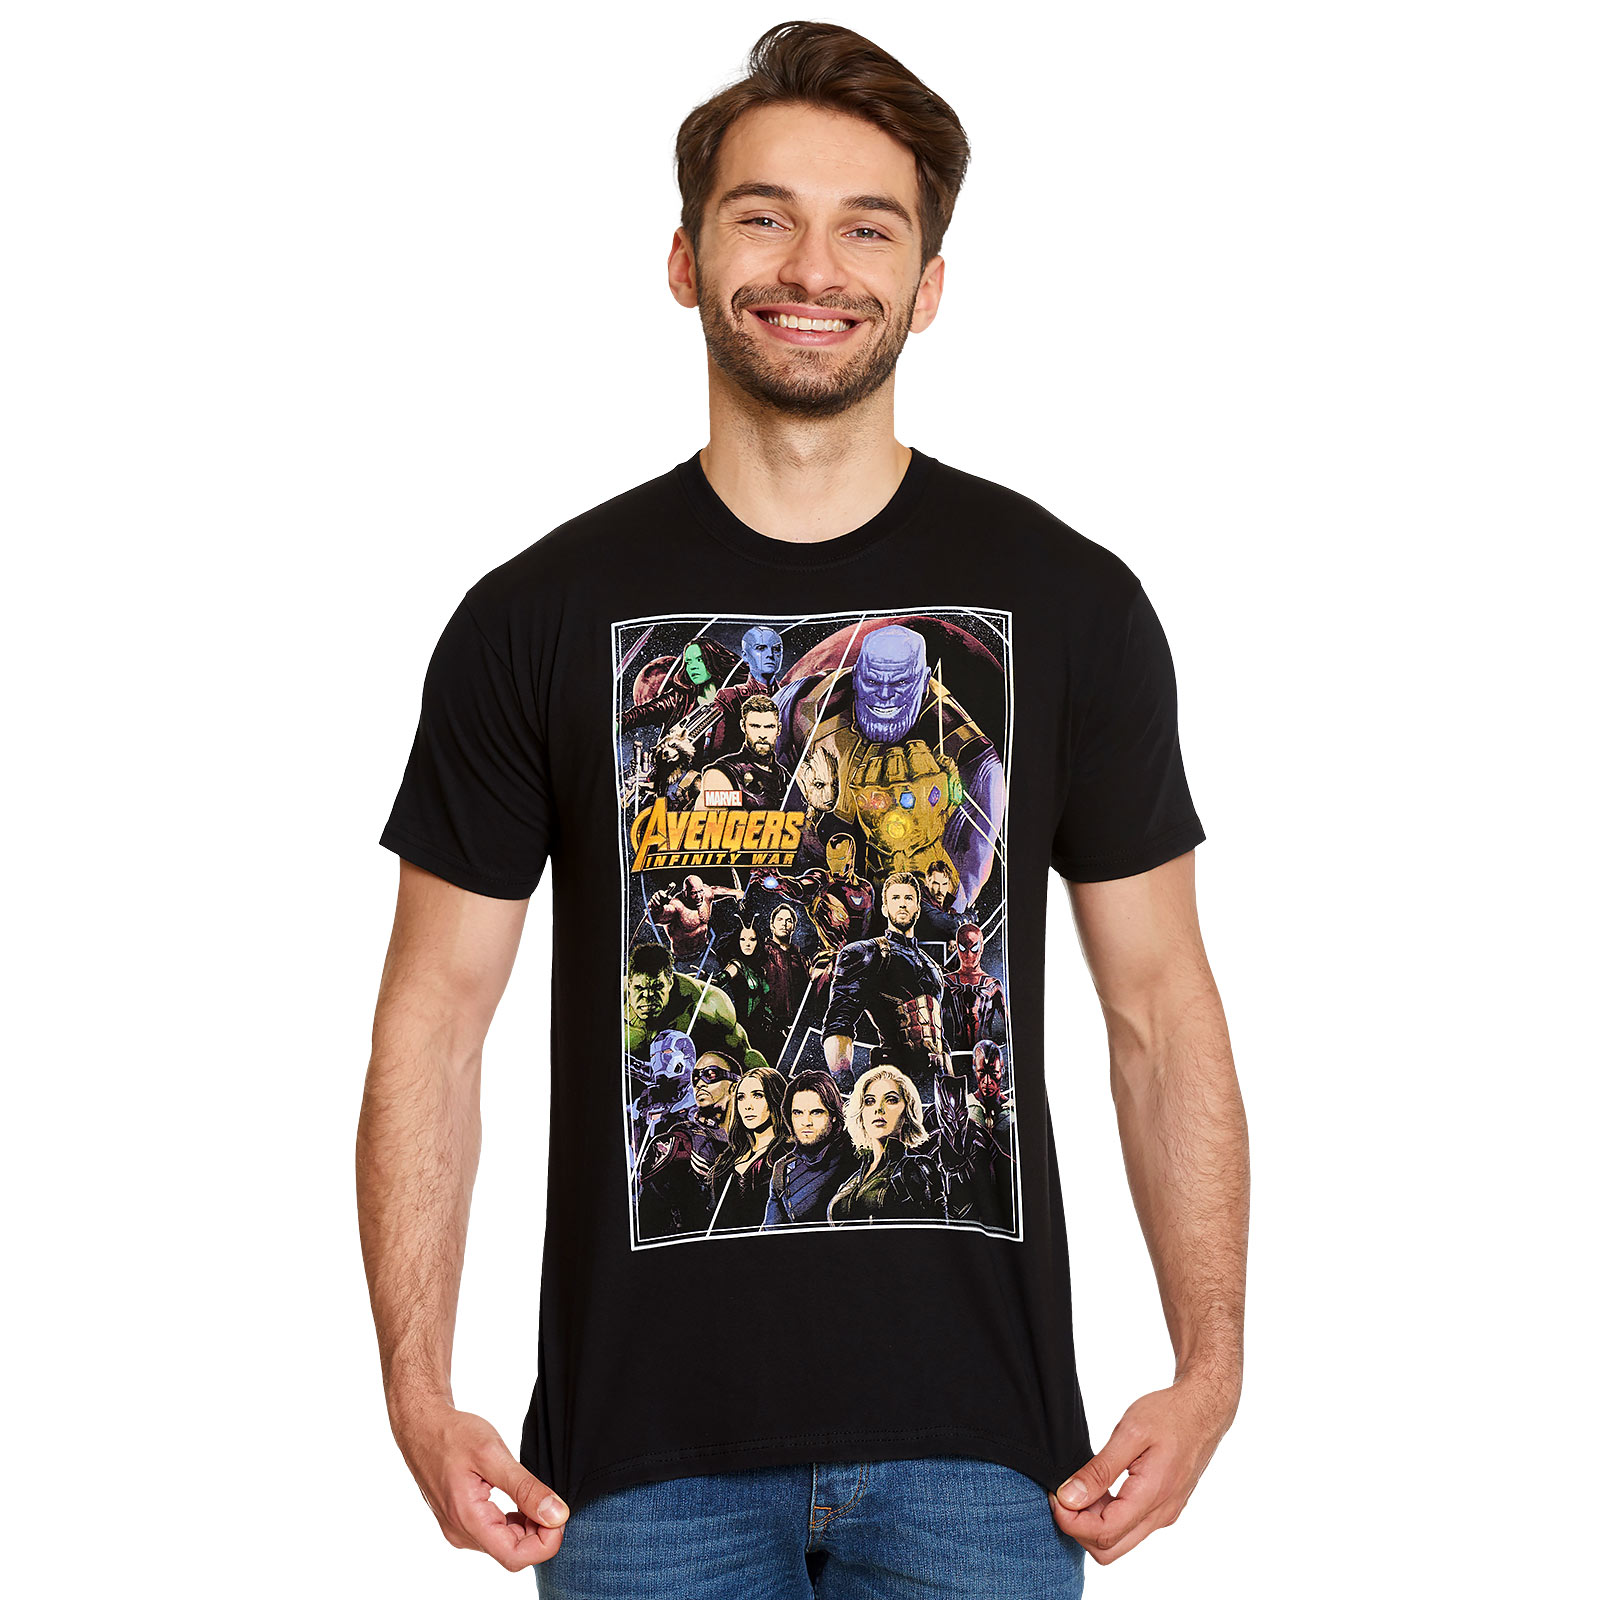 Avengers - Infinity War Poster Collage T-Shirt Black